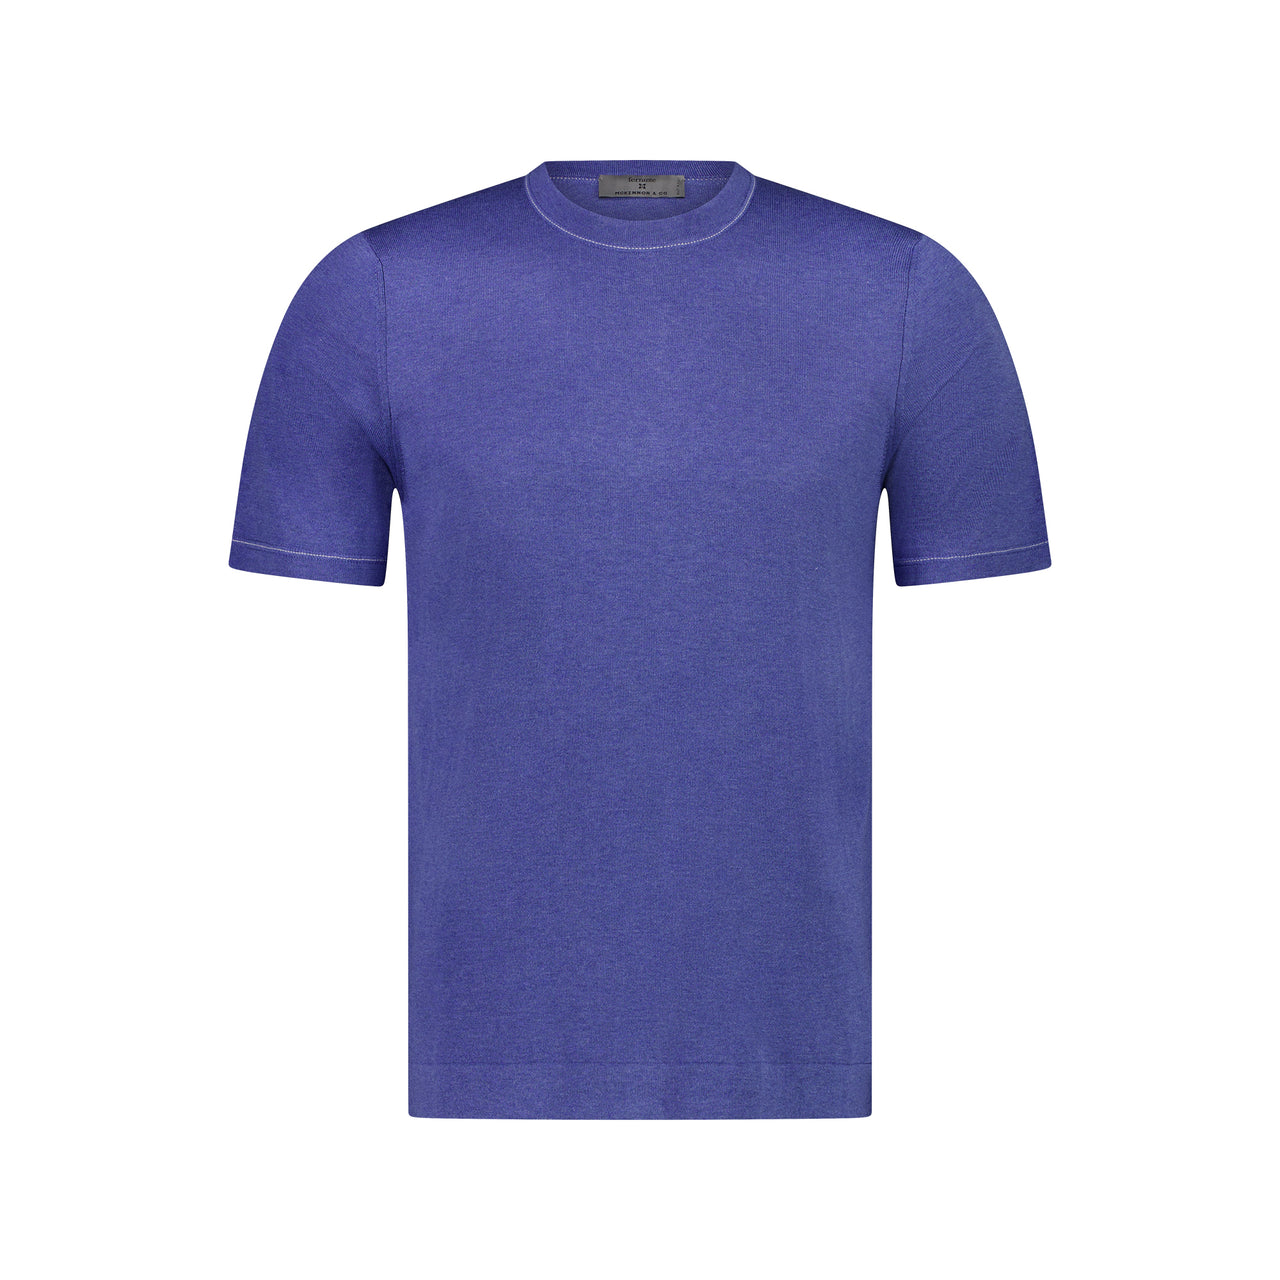 MCKINNON x FERRANTE Silk/Cotton T-Shirt in LIGHT BLUE